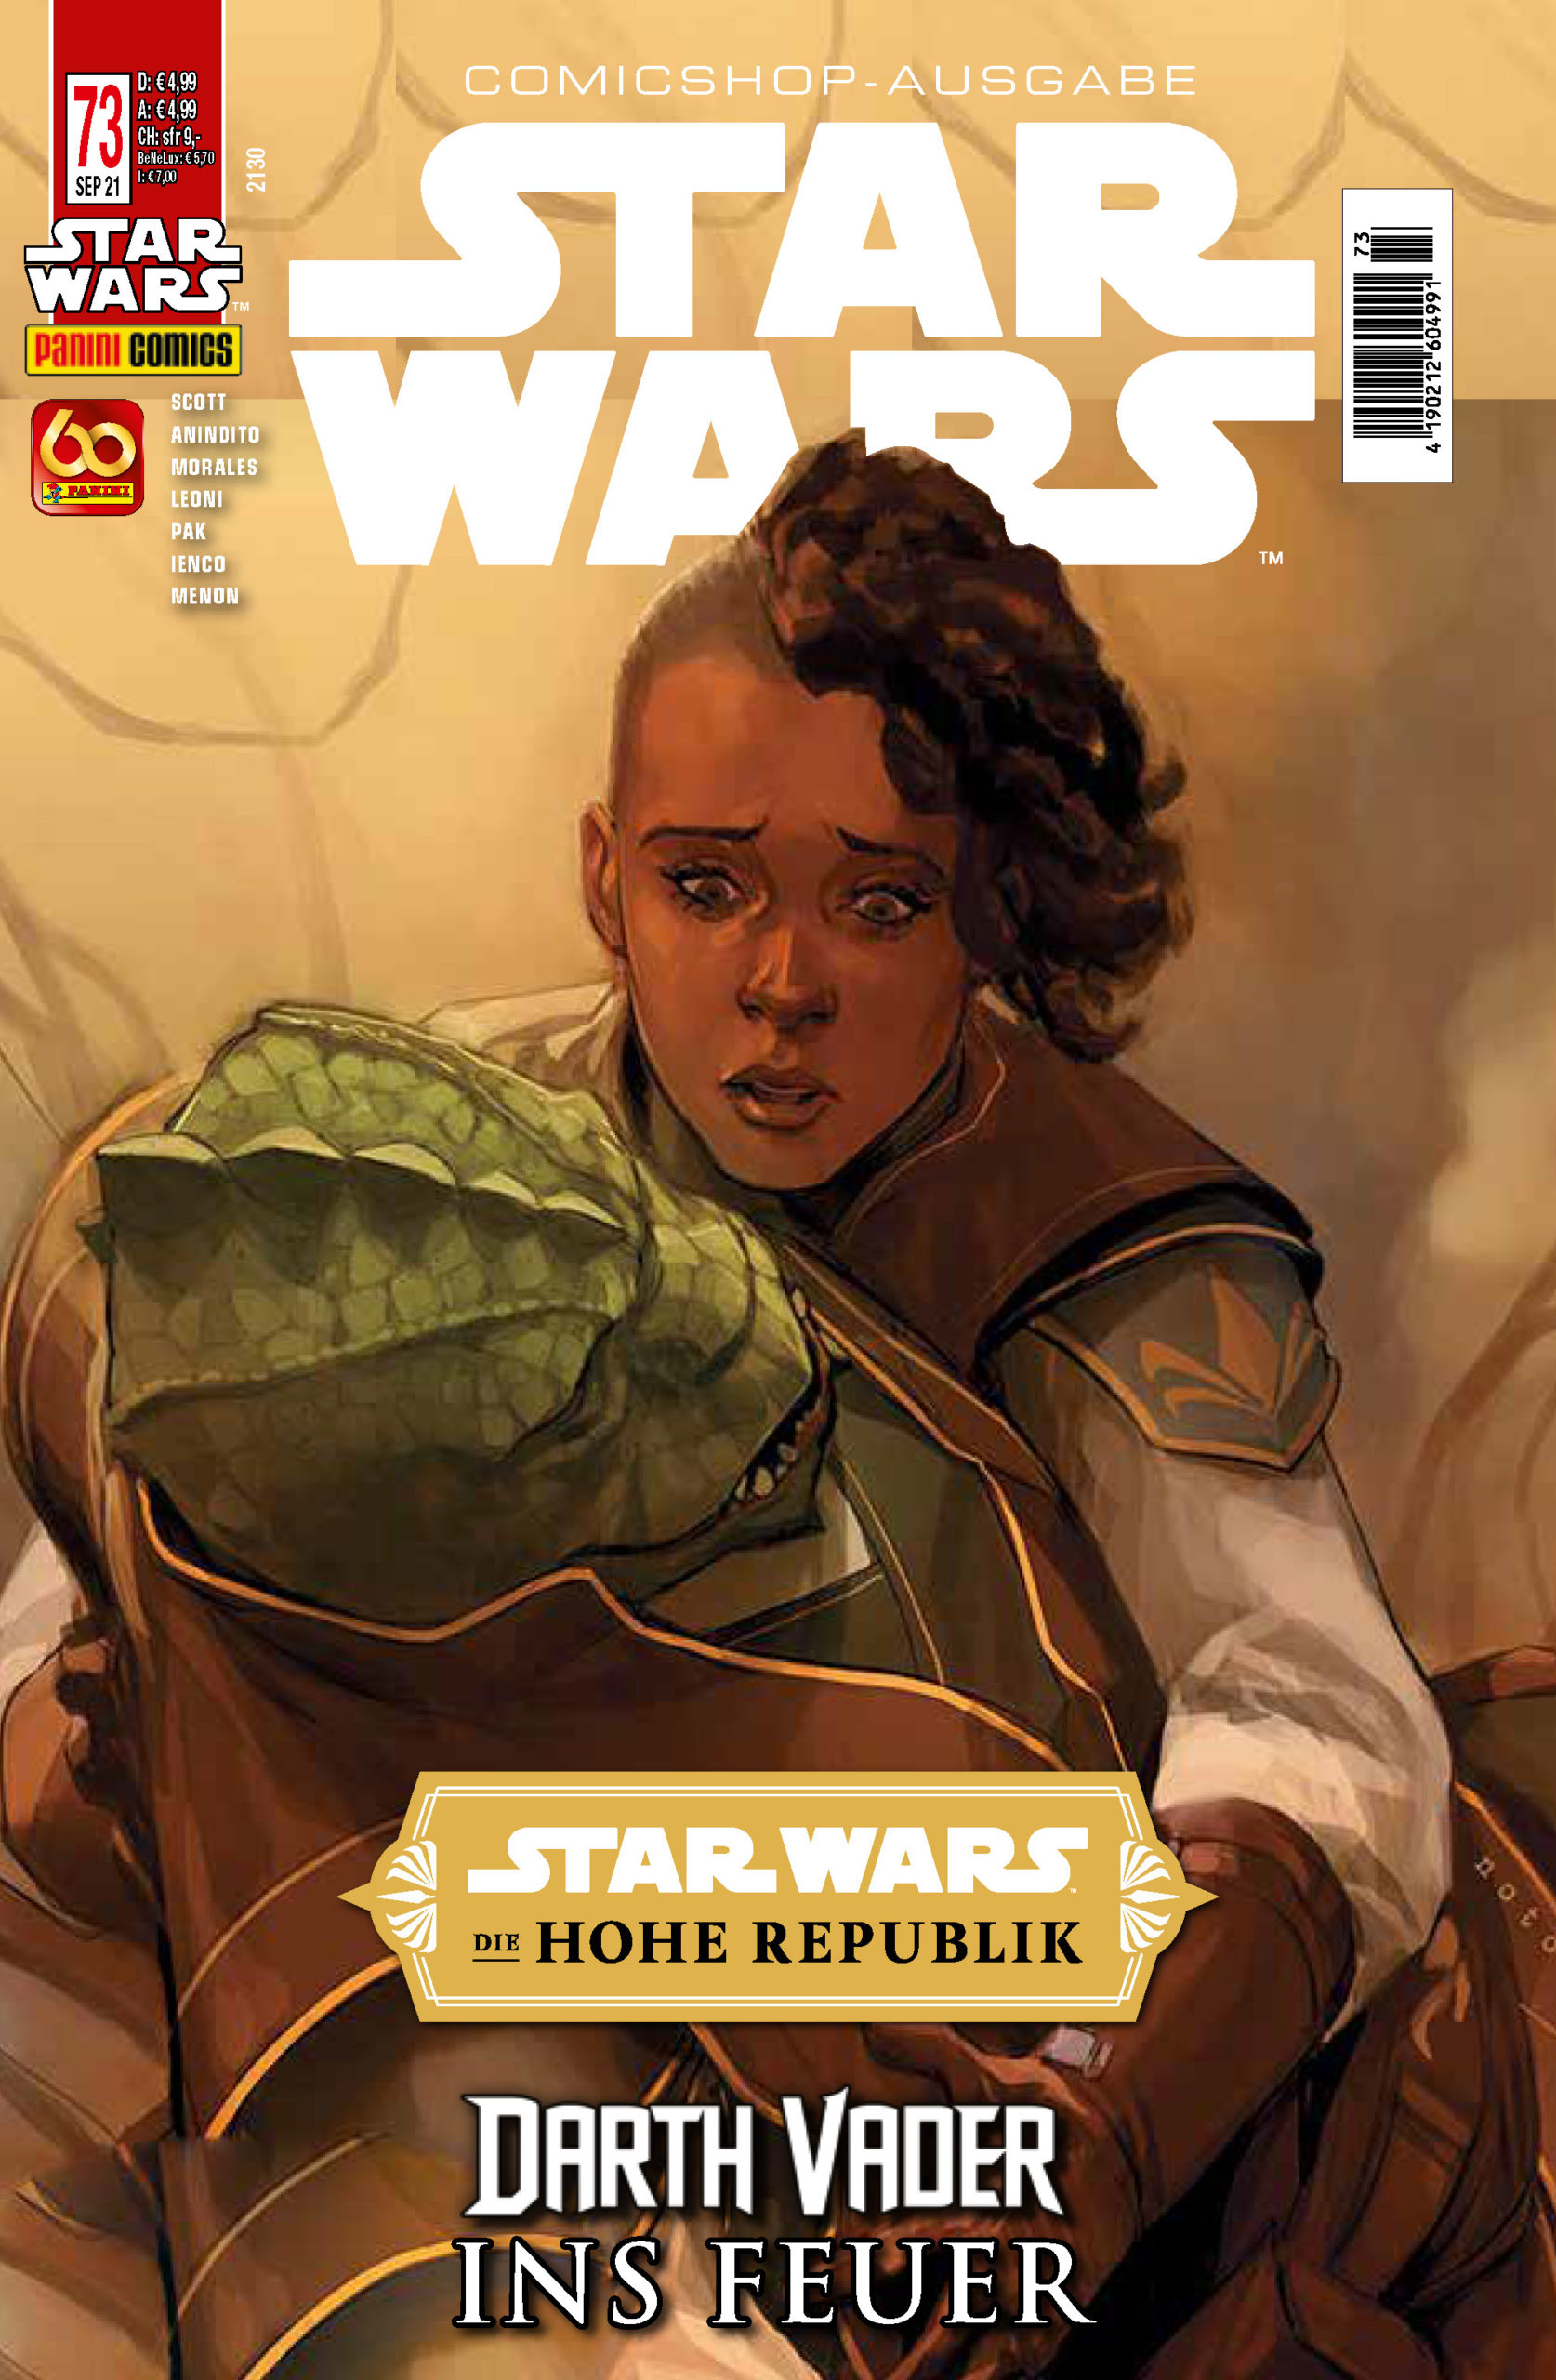 Star Wars #73 (Comicshop-Ausgabe) (18.08.2021)